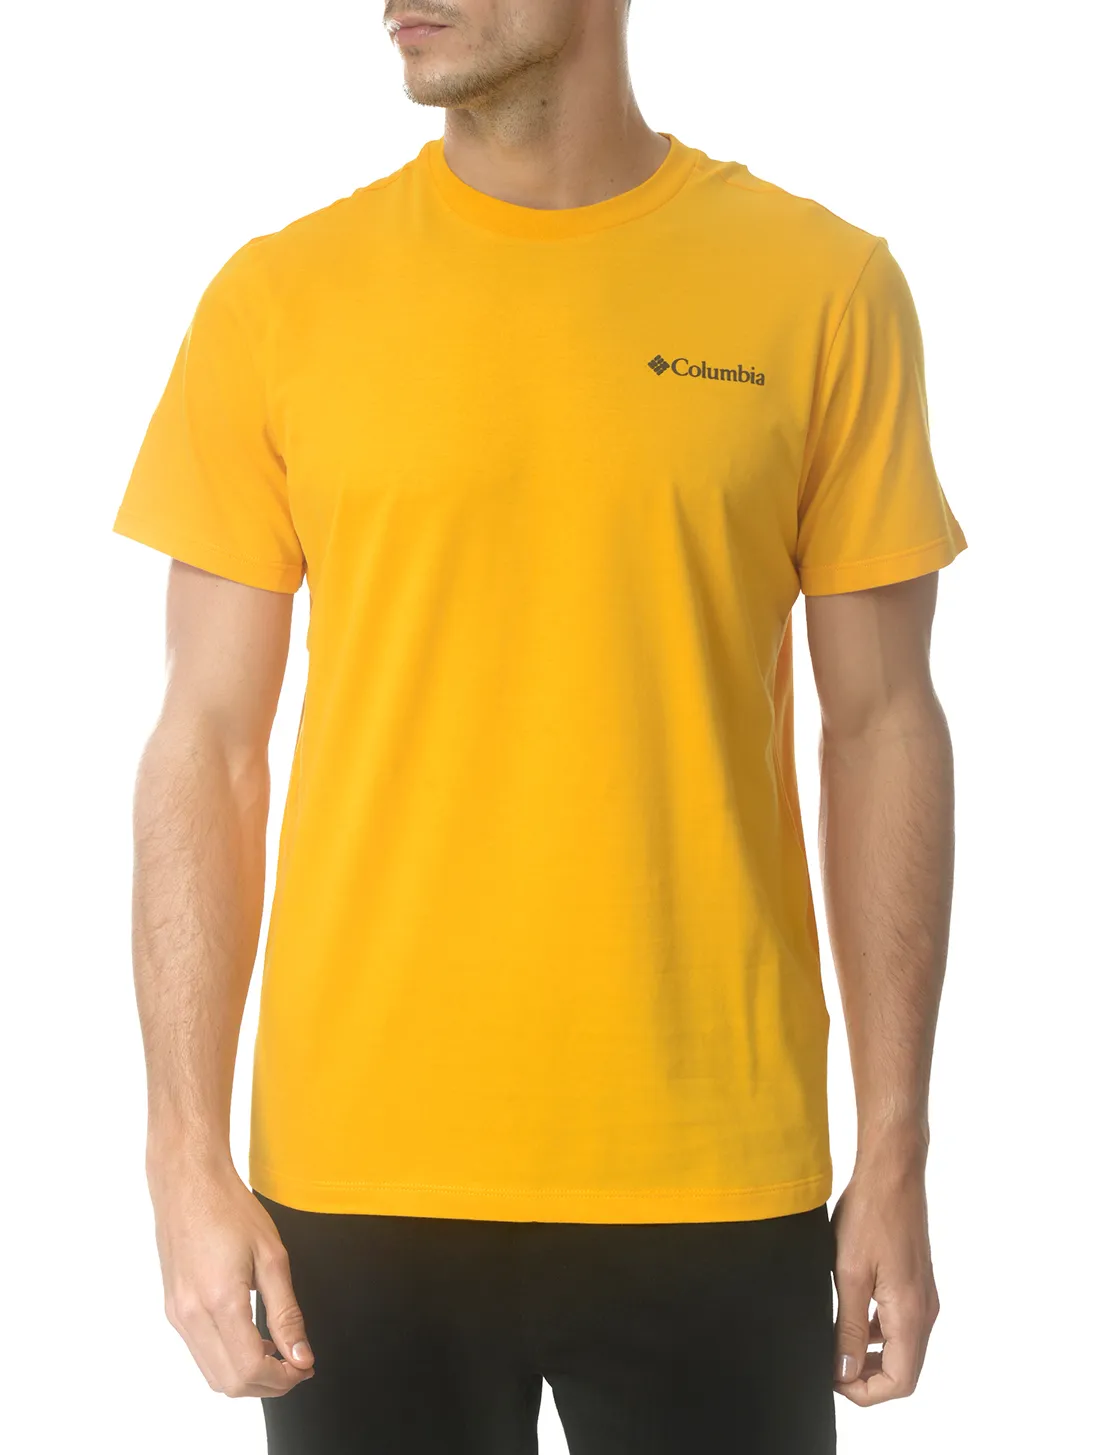 Camiseta Columbia Amarelo Masc